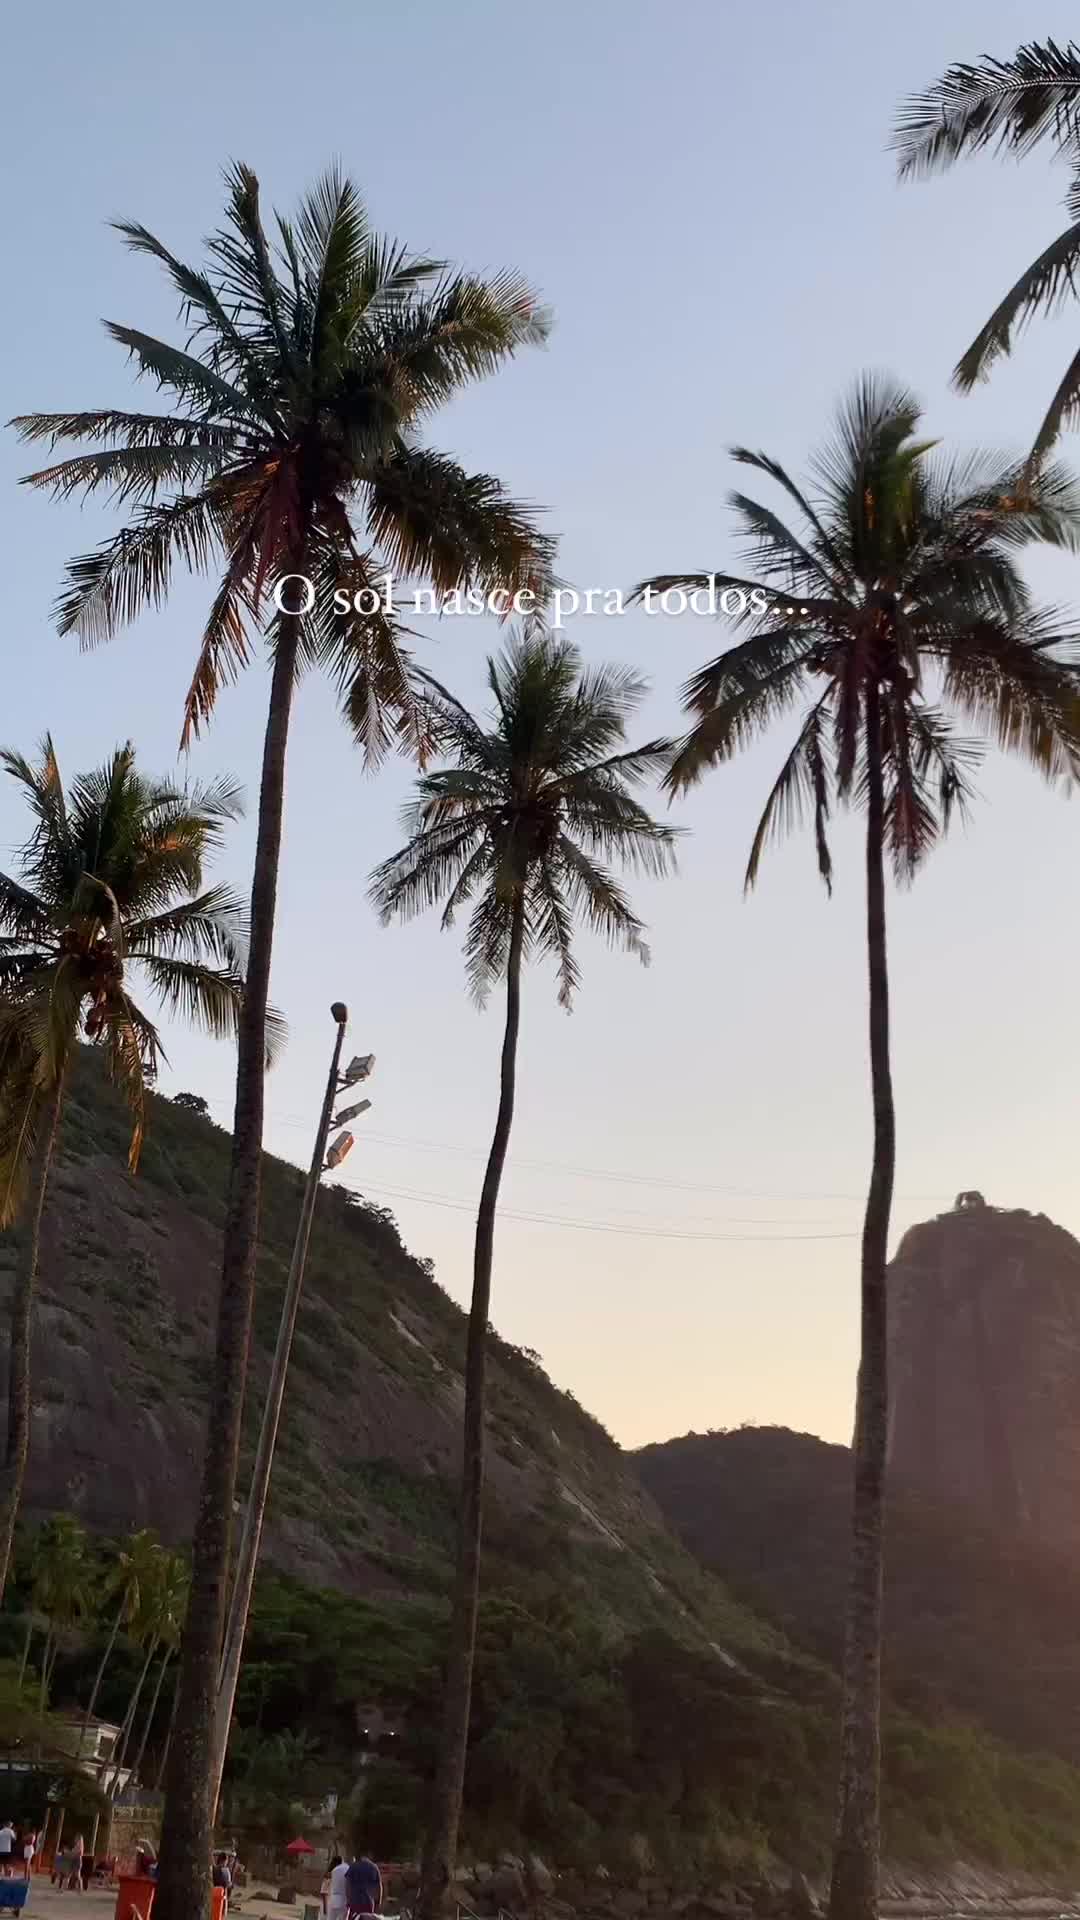 Best Sunrise Spot in Rio - Praia Vermelha